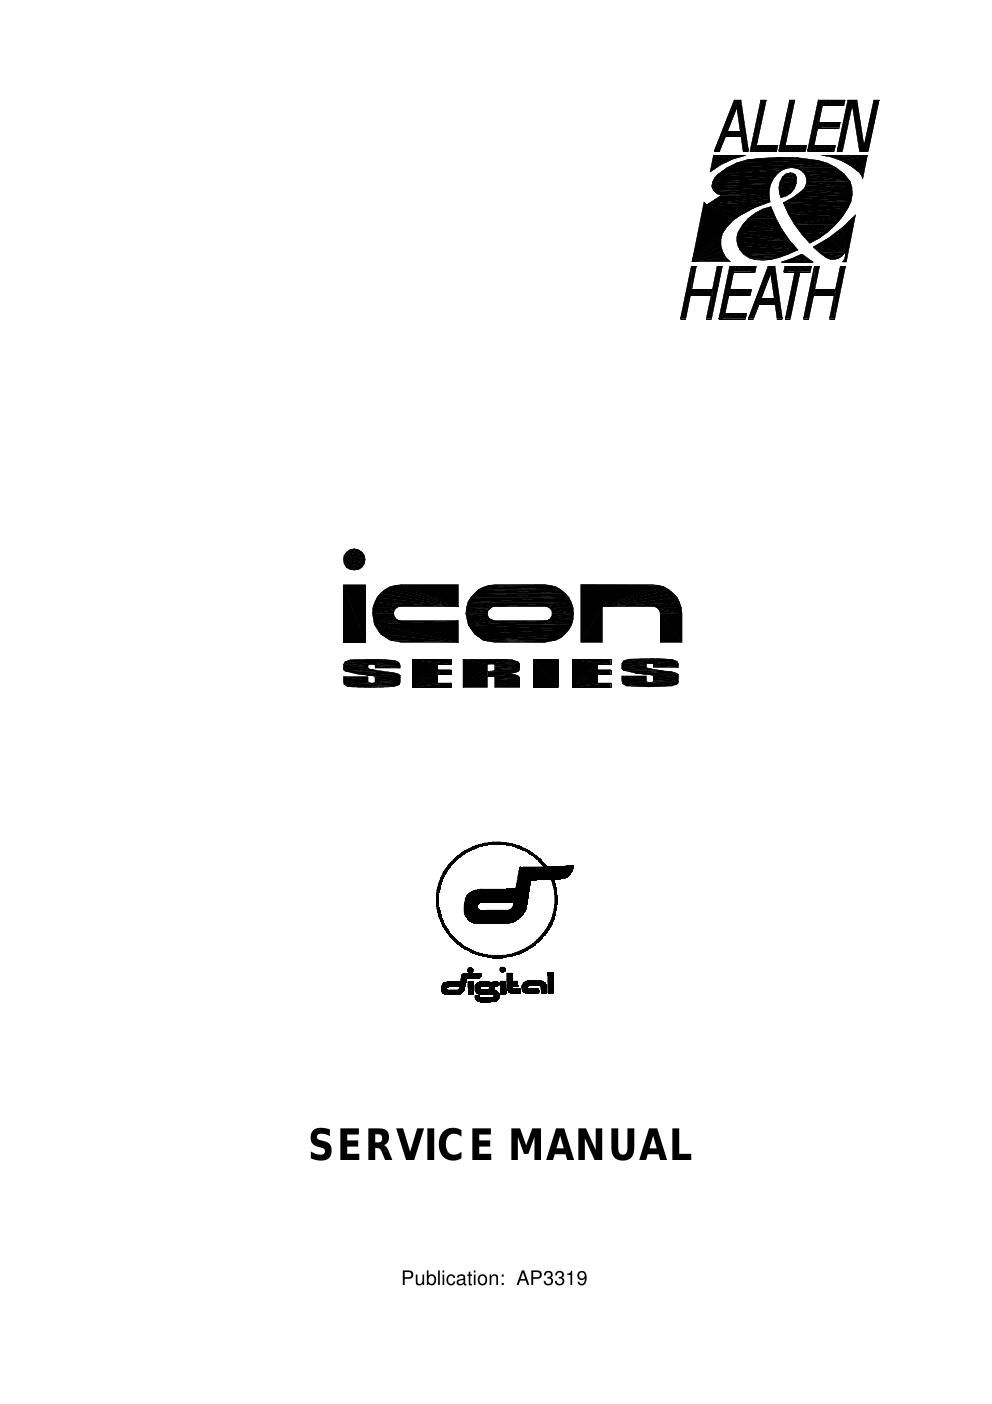 allen heath icon series service manual